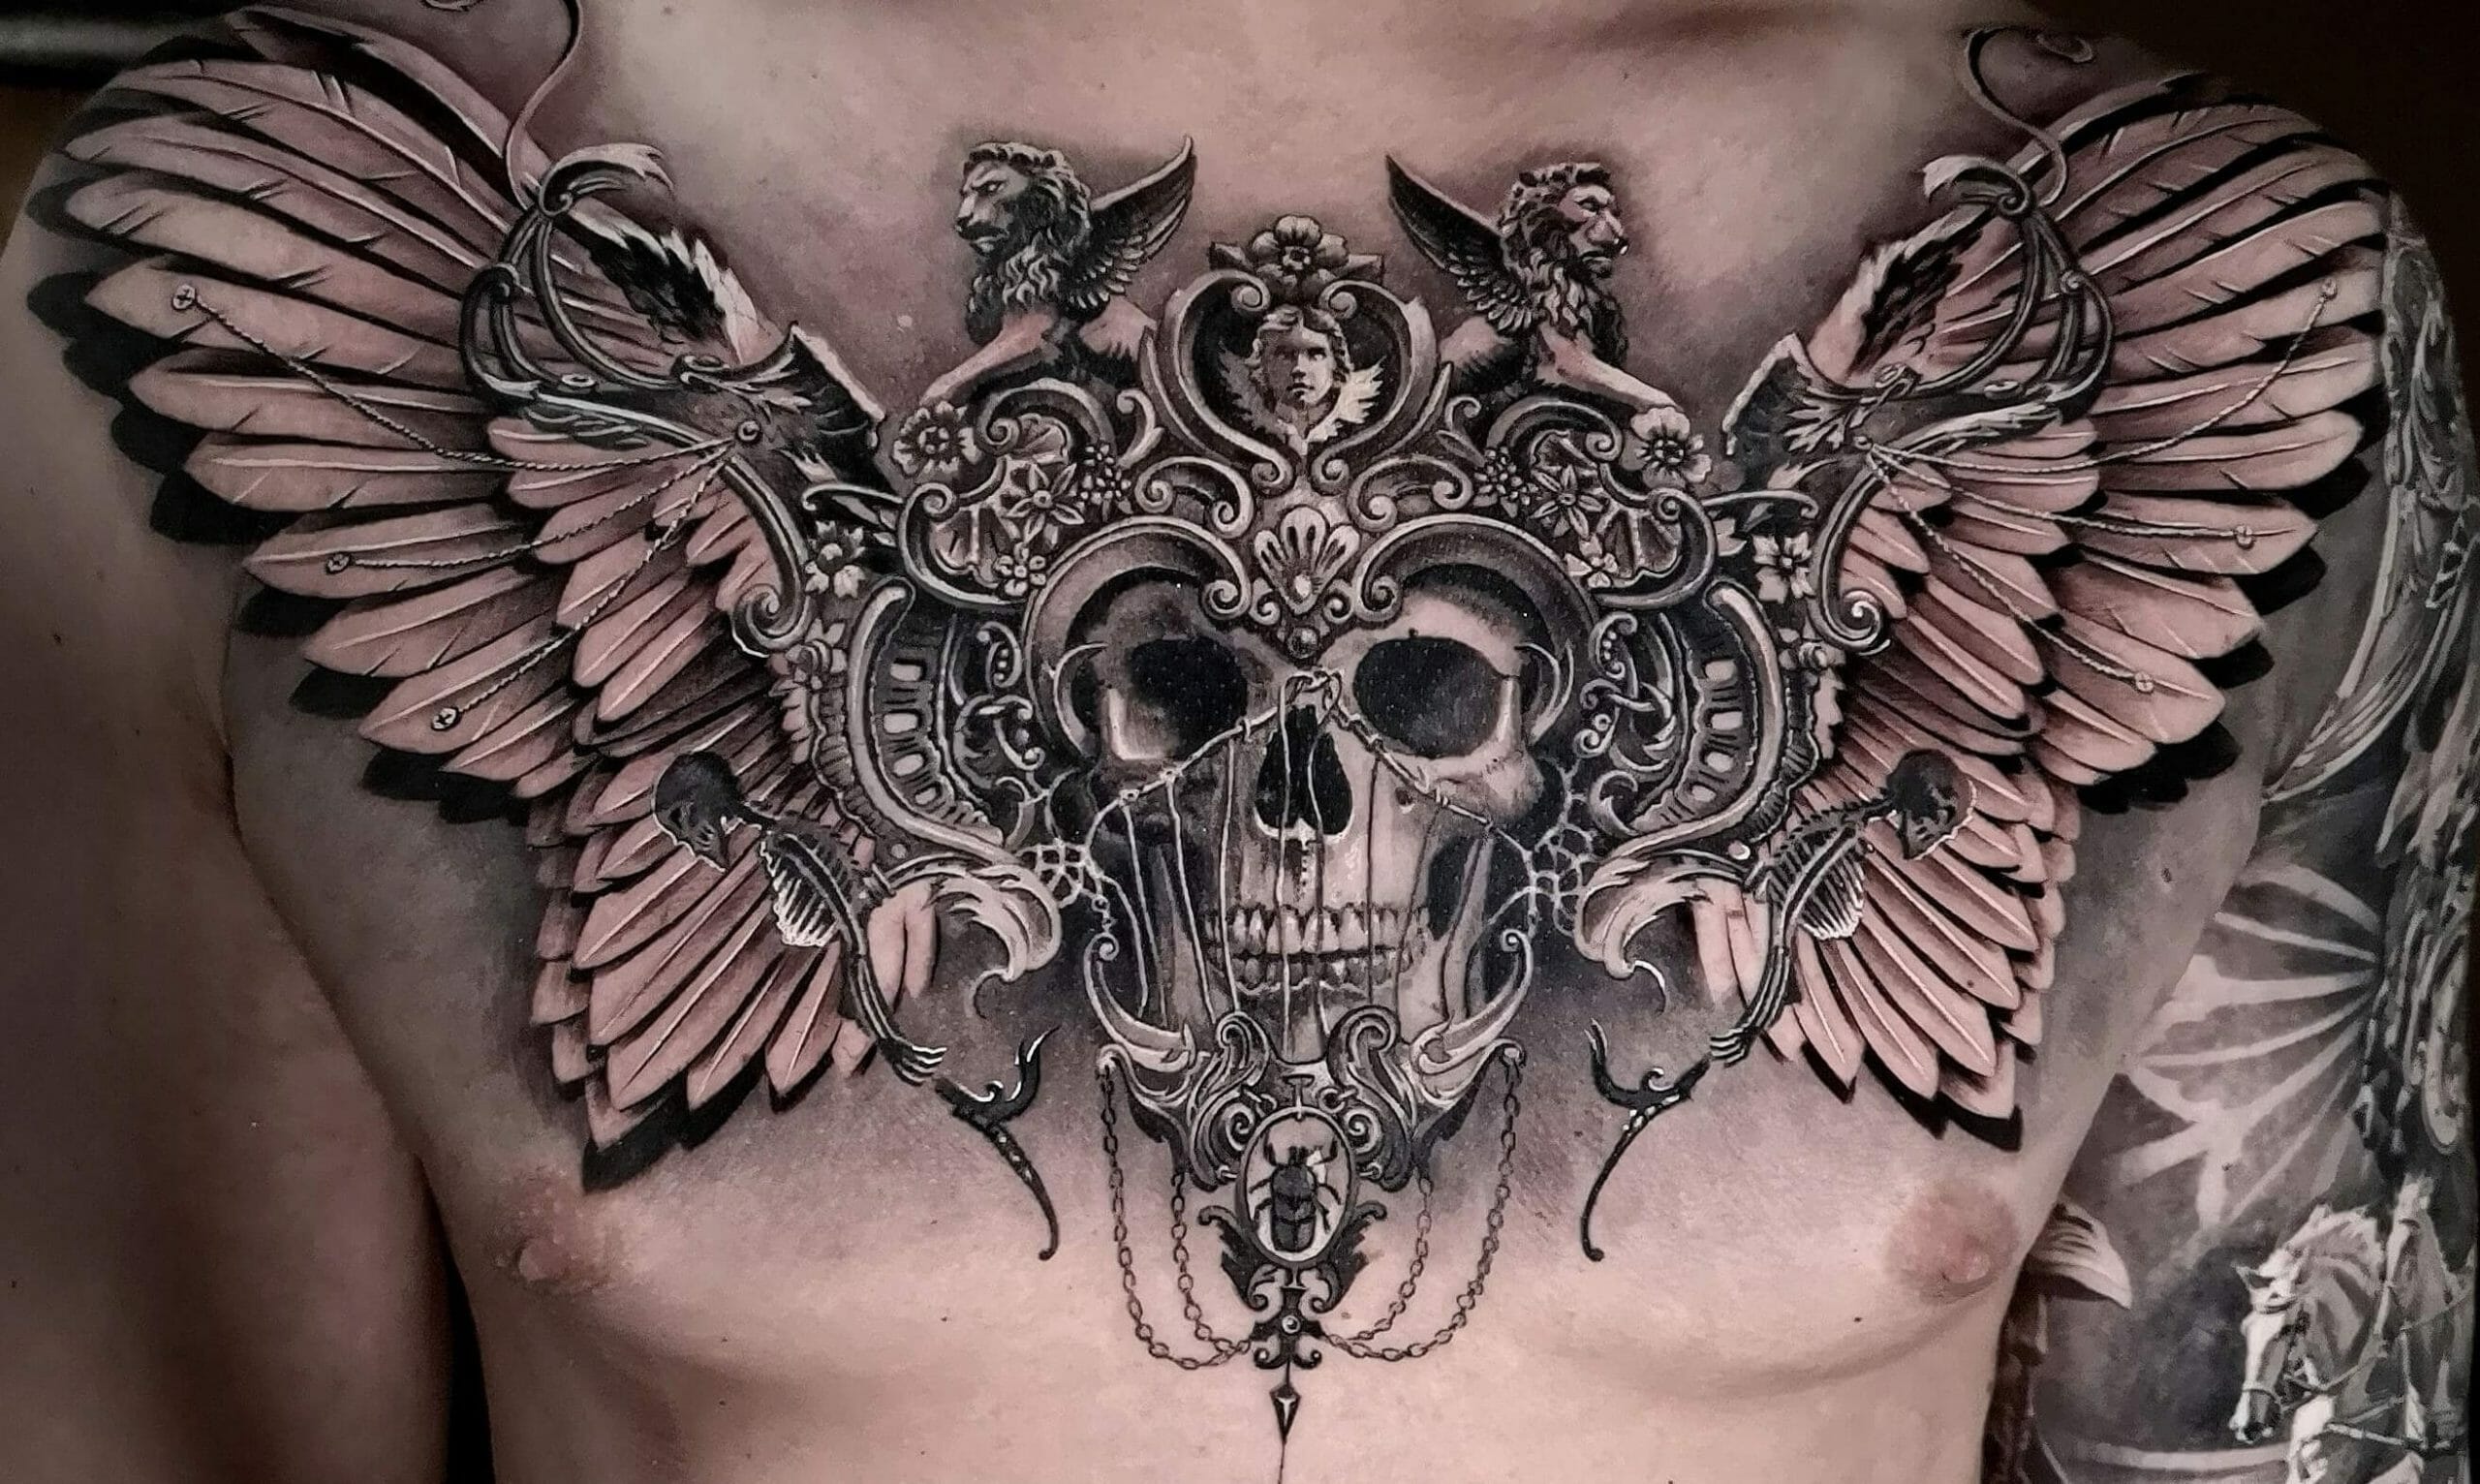 Bamboo Tattoo studio - Big ass skull on a big ass chest!! #ink #tattoos  #realism #skull #rose #realistic #skulls #roses #inked #realismtattoo  #tattooartist #skulltattoo #skeleton #tattooart #realistictattoo #tattooed  #sketch #blackandgrey #crueltyfree ...